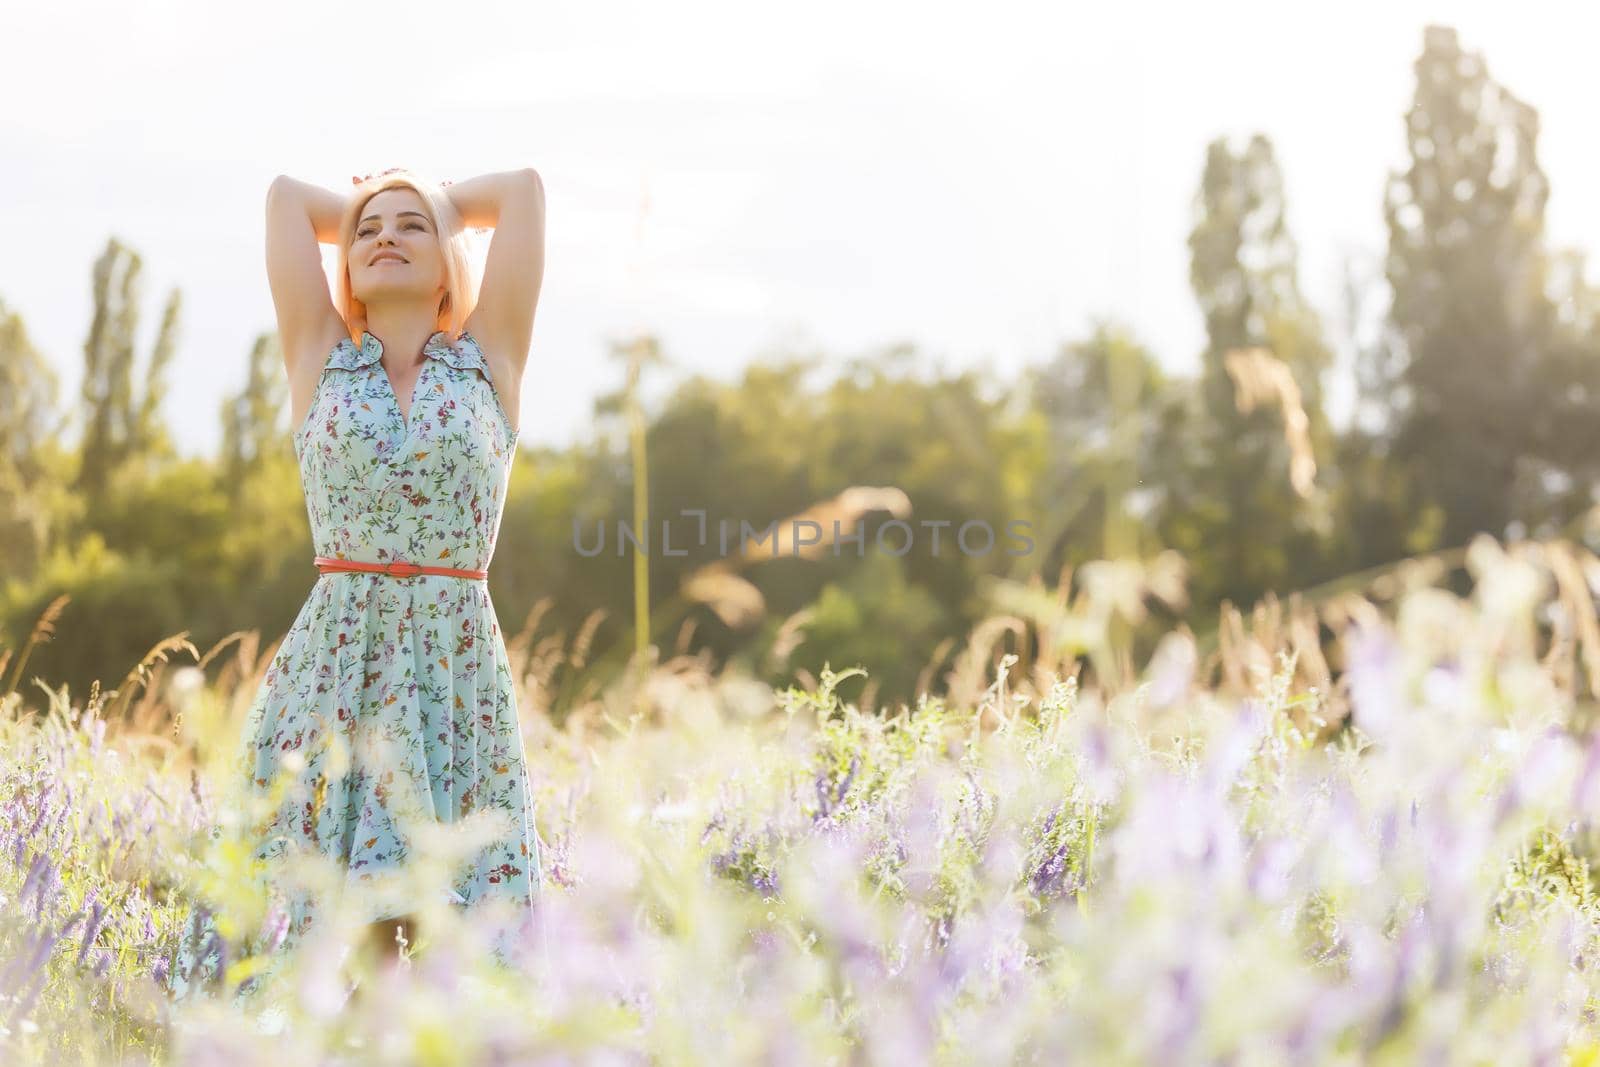 Cute lady walking through the meadow by Andelov13